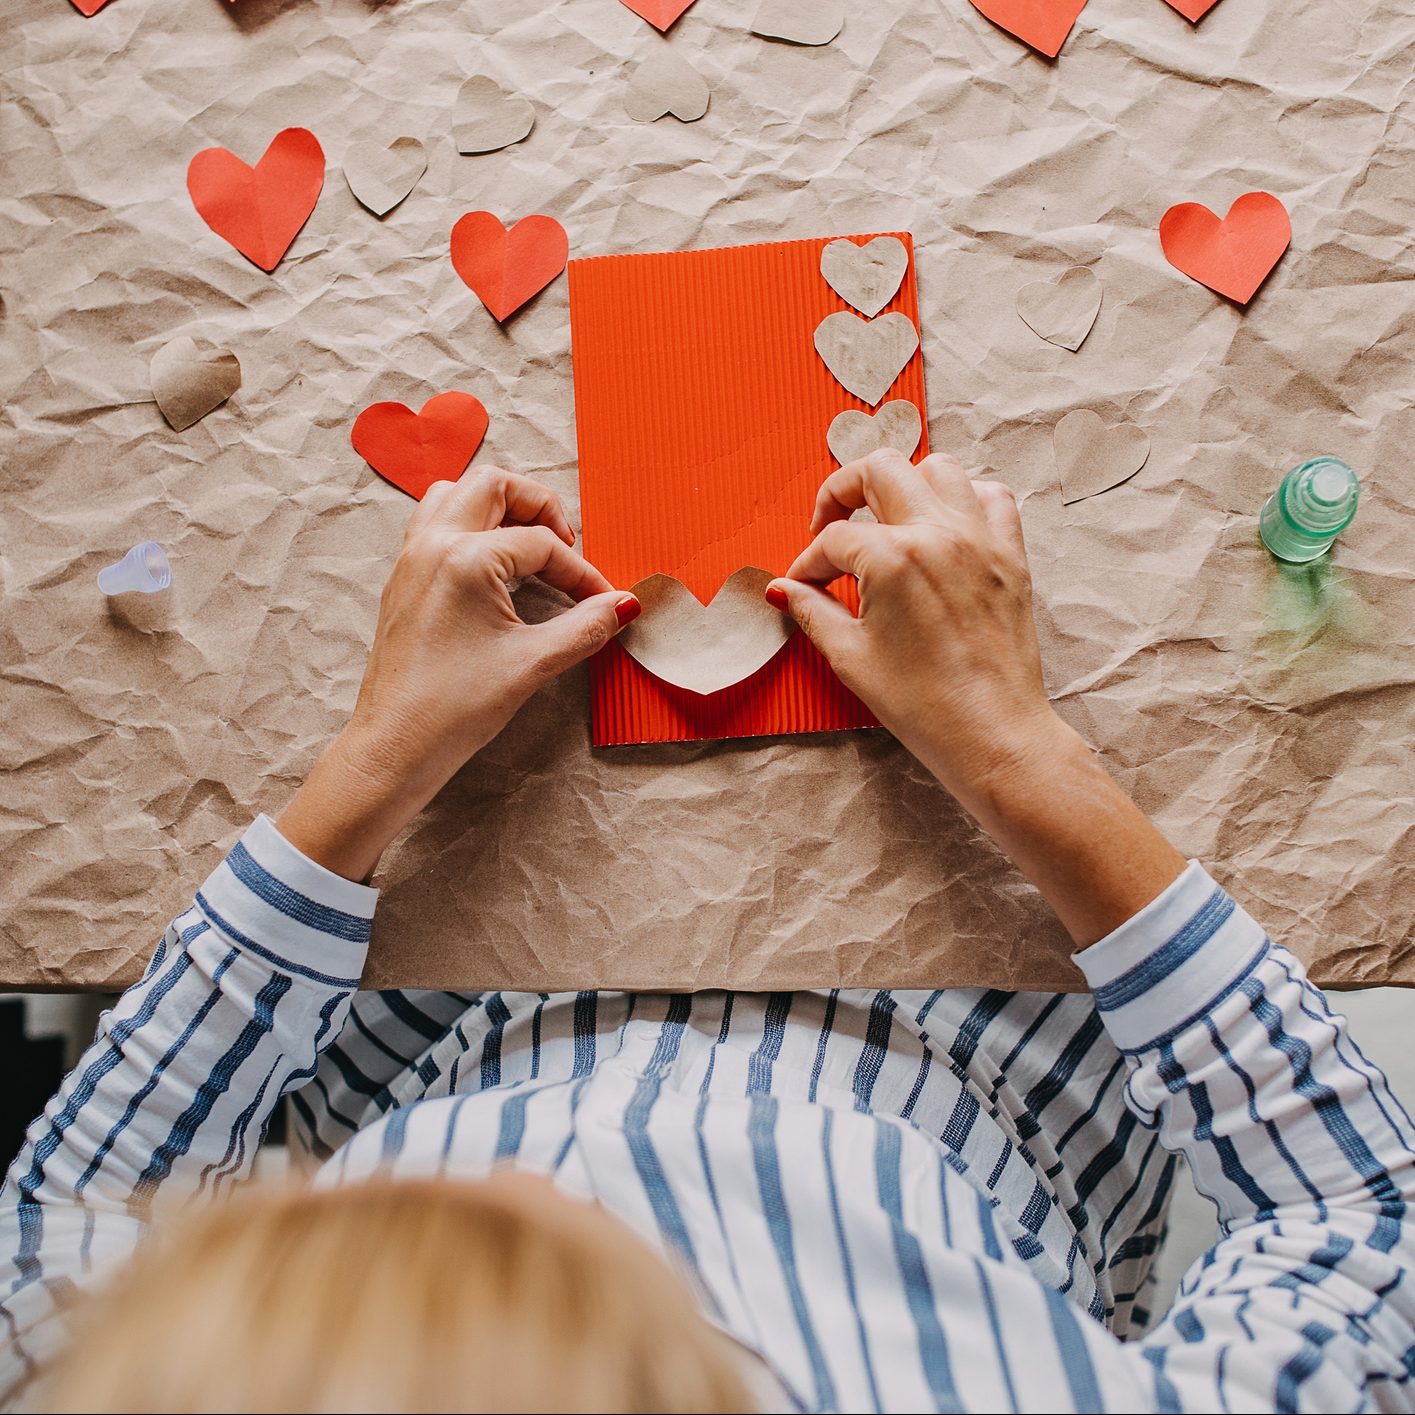 Cute Valentine Puns - Romantic Love Card - Card For Boyfriend or